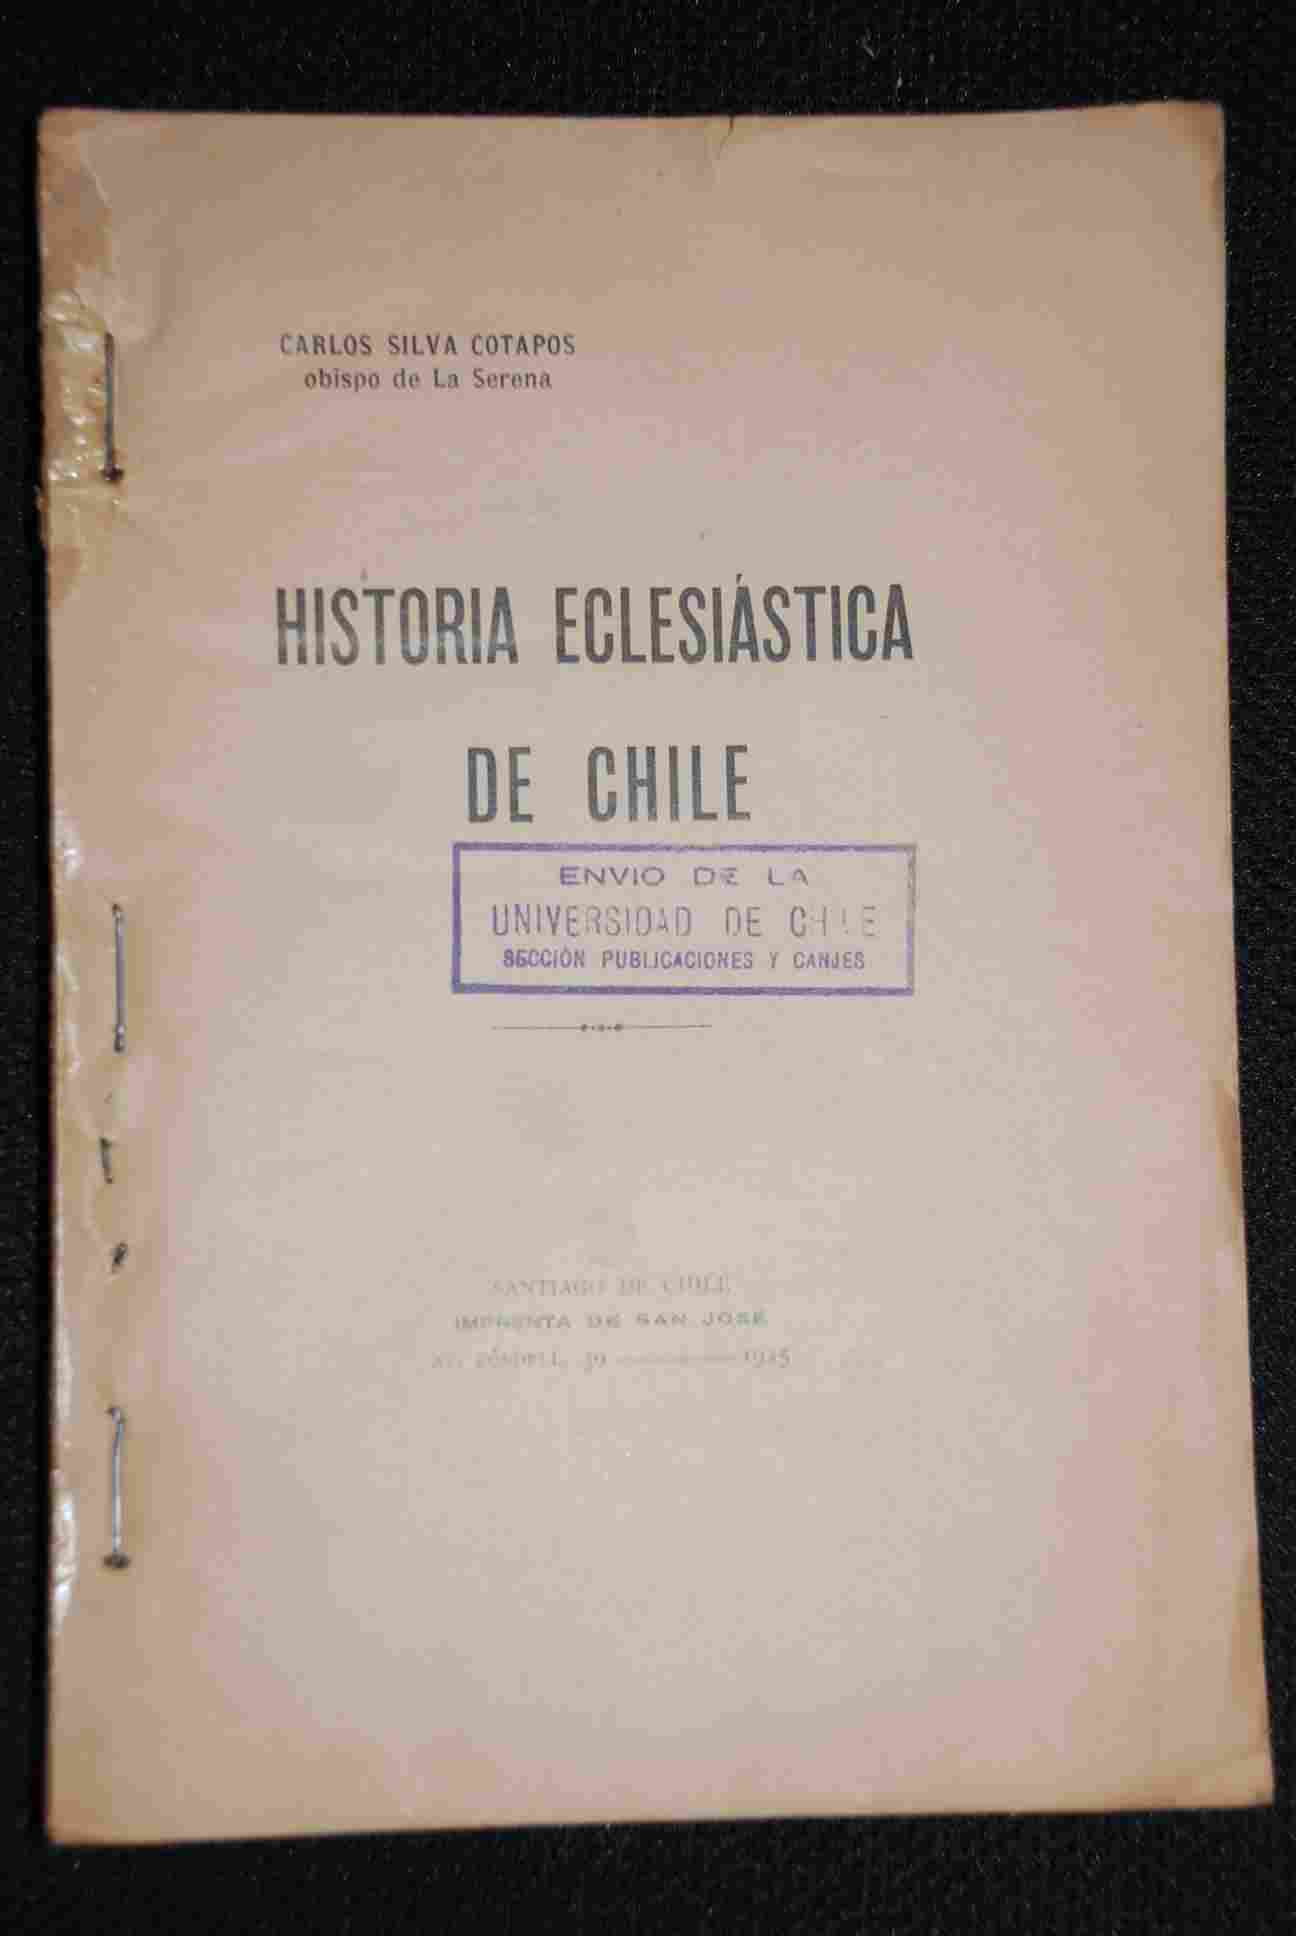 Carlos Silva Cotapos - Historia Eclesiastica de Chile 